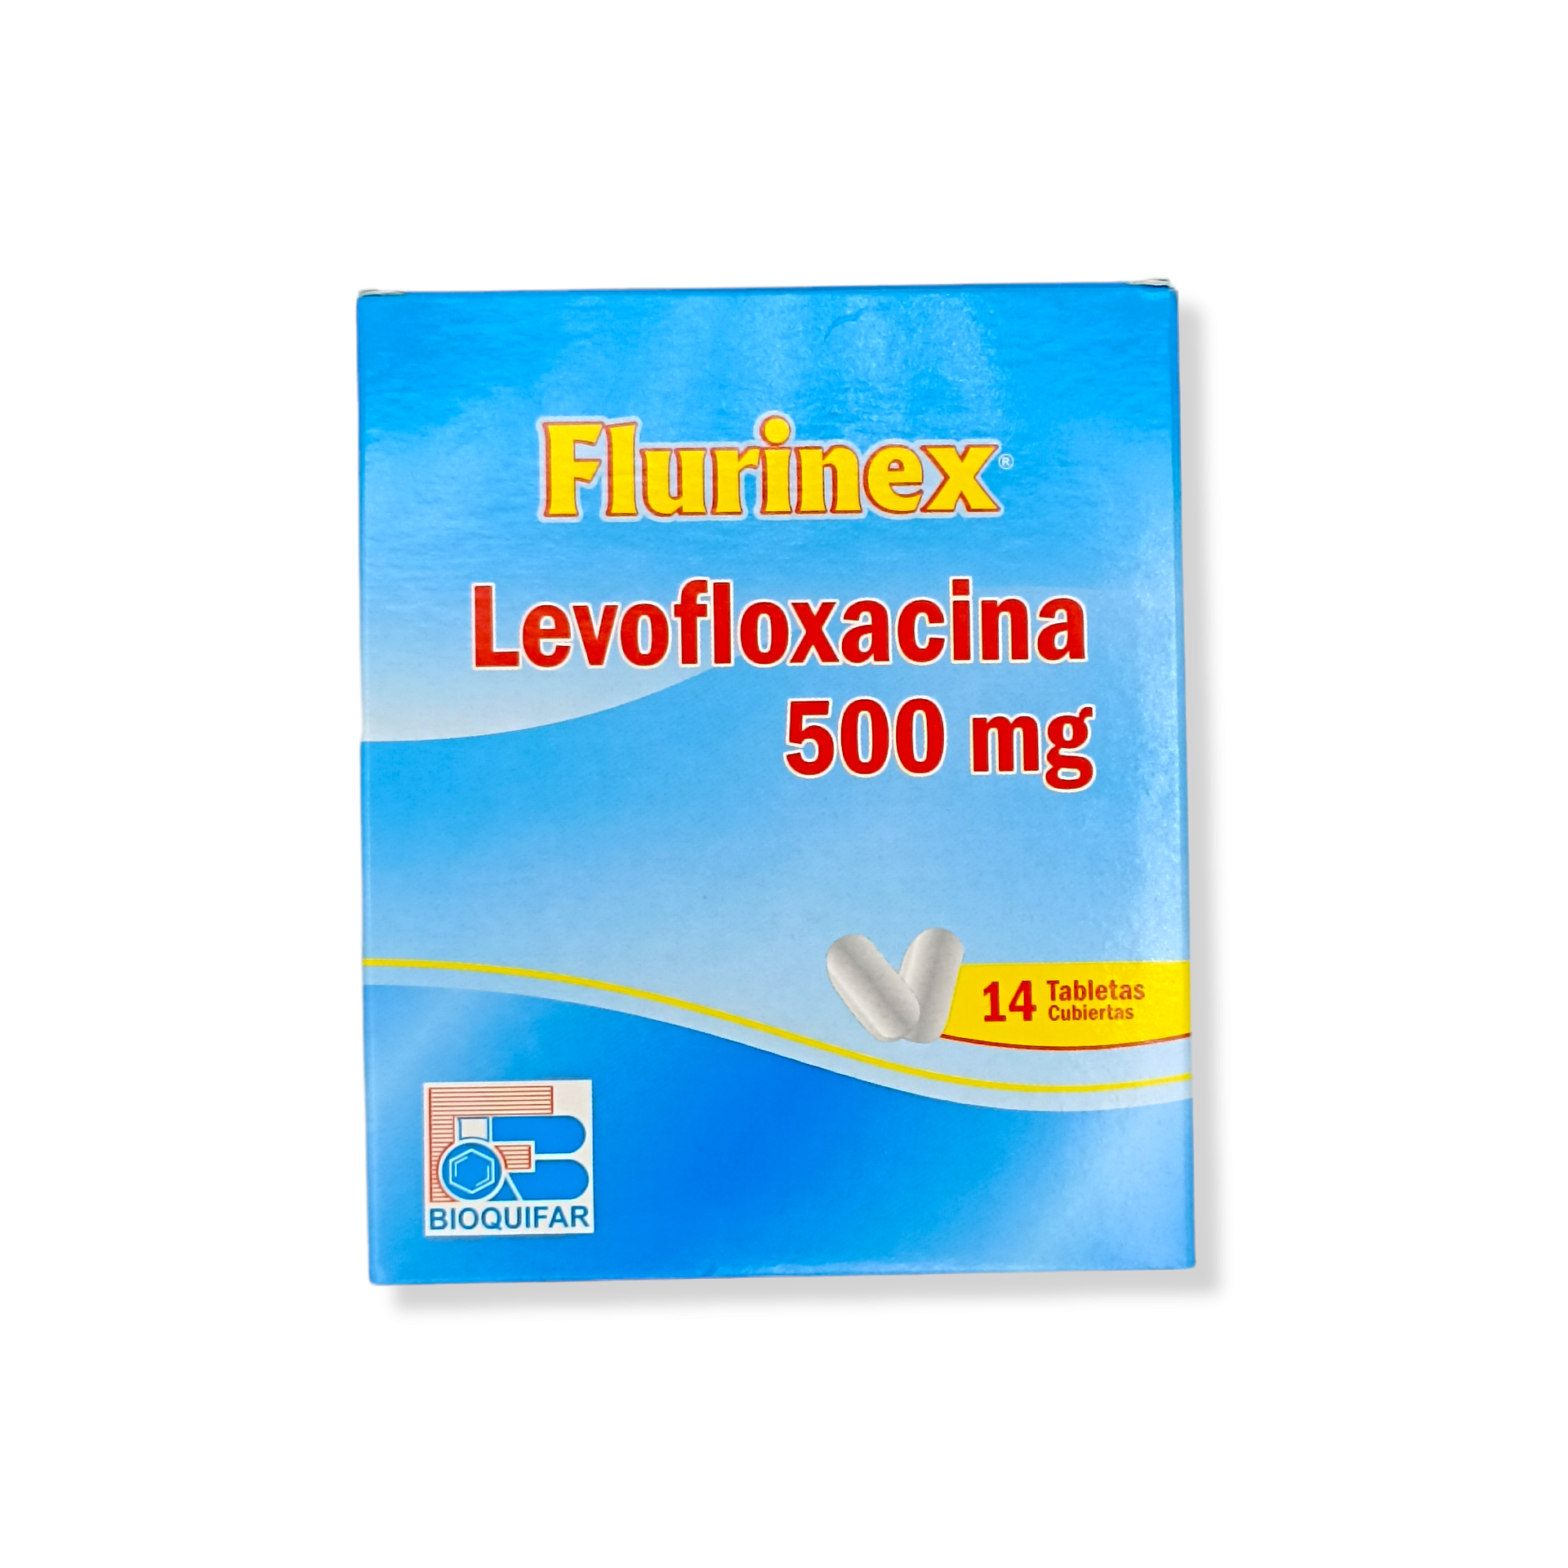 FLURINEX (LEVOFLOXACINA) 500 MG 14 TABLETAS BIOQUIFAR